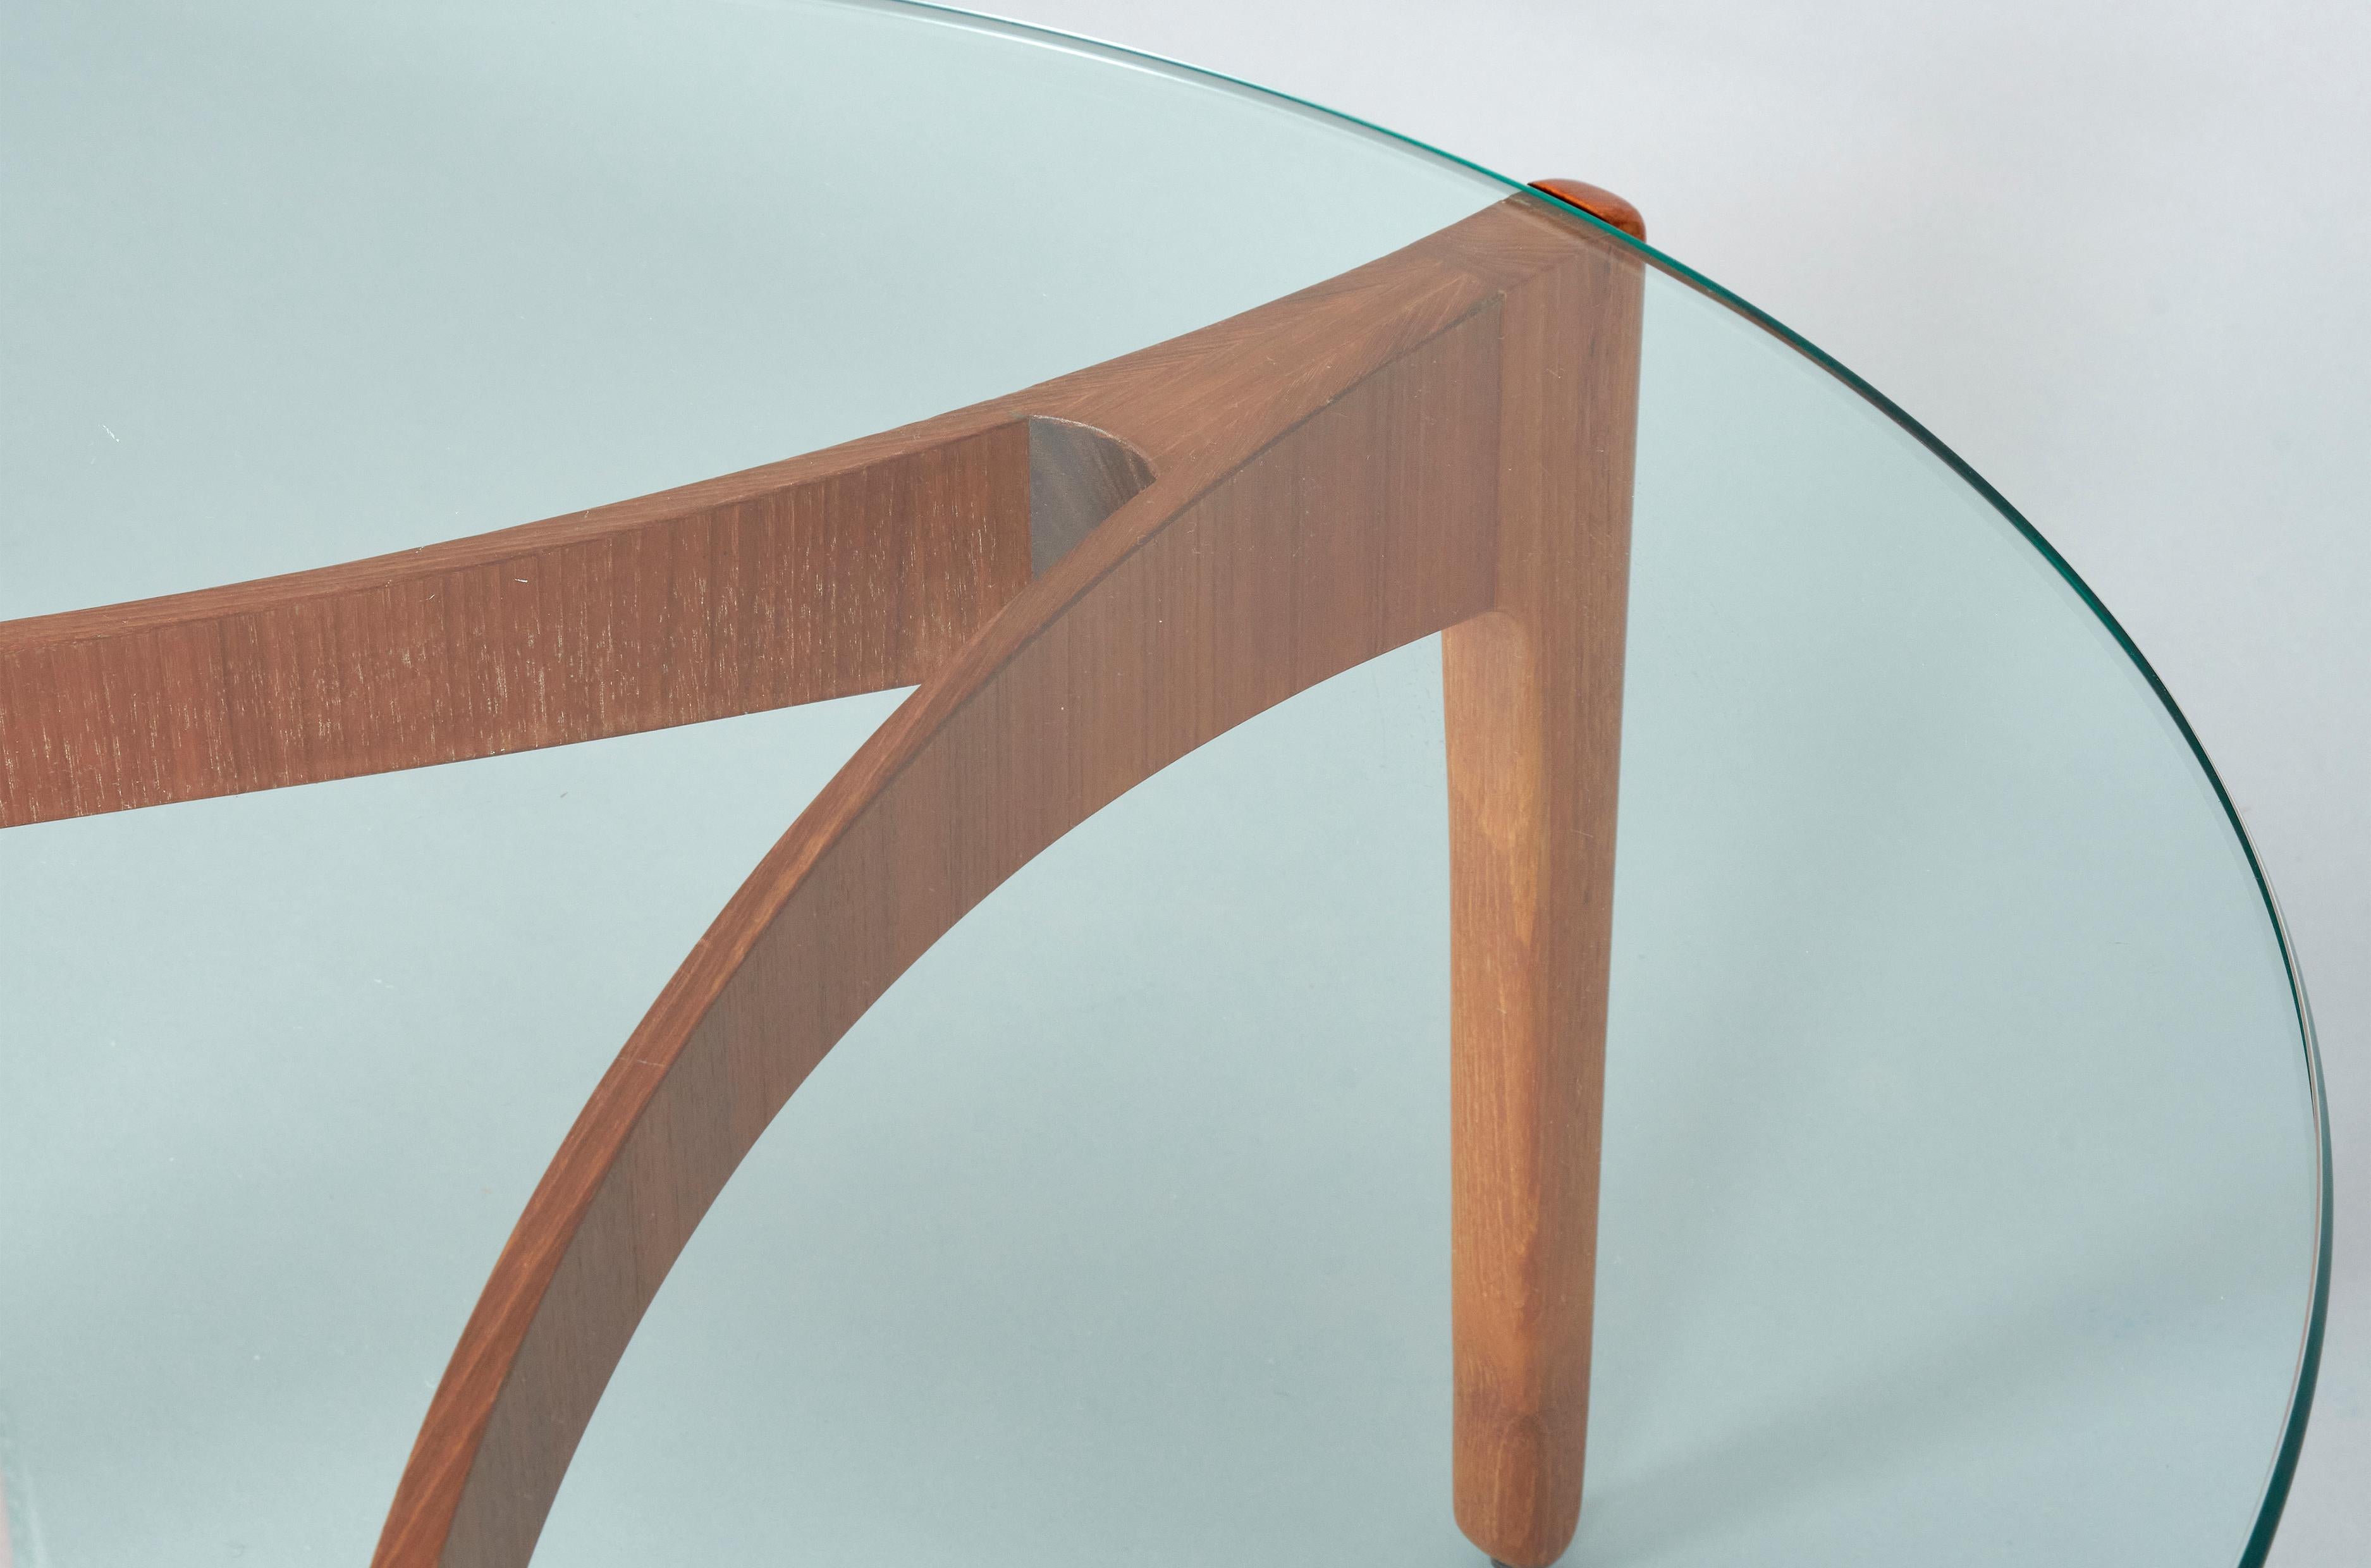 Danish Midcentury Modern Sven Ellekaer Teak and Glass Coffee Table For Sale